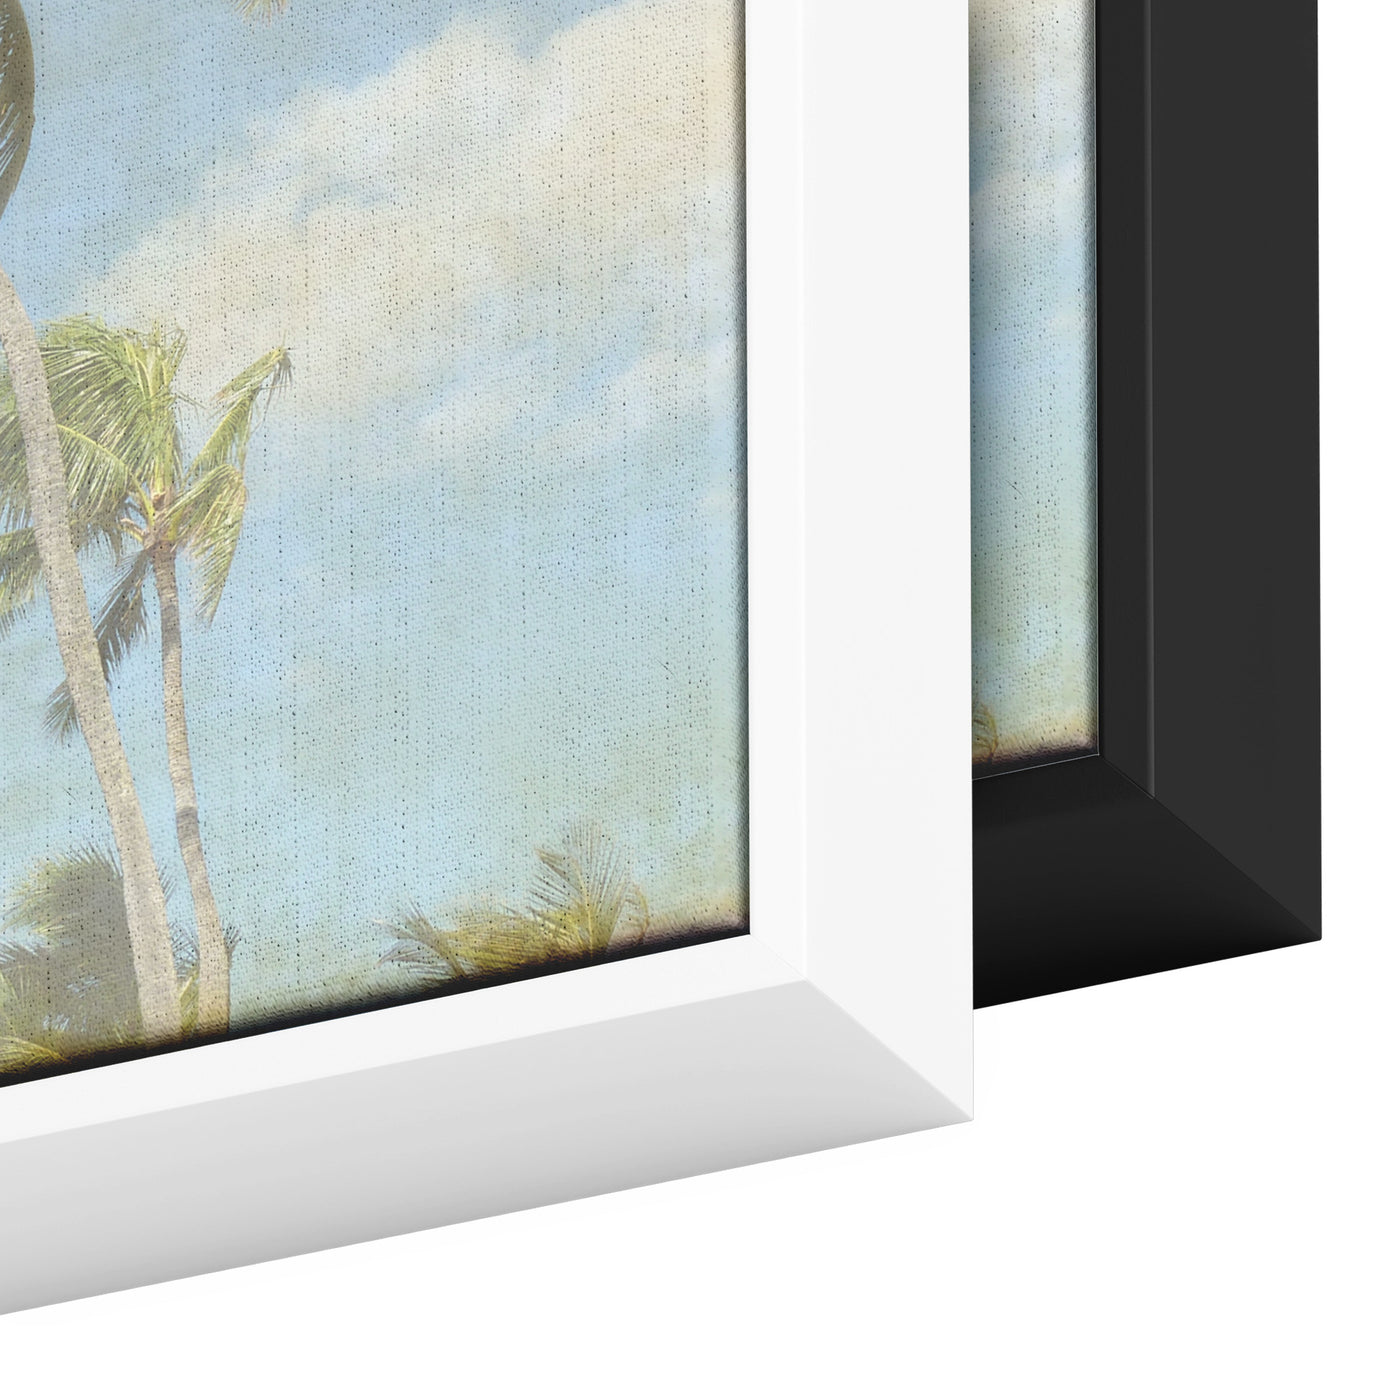 Grunge Palm Trees | Framed Canvas Print